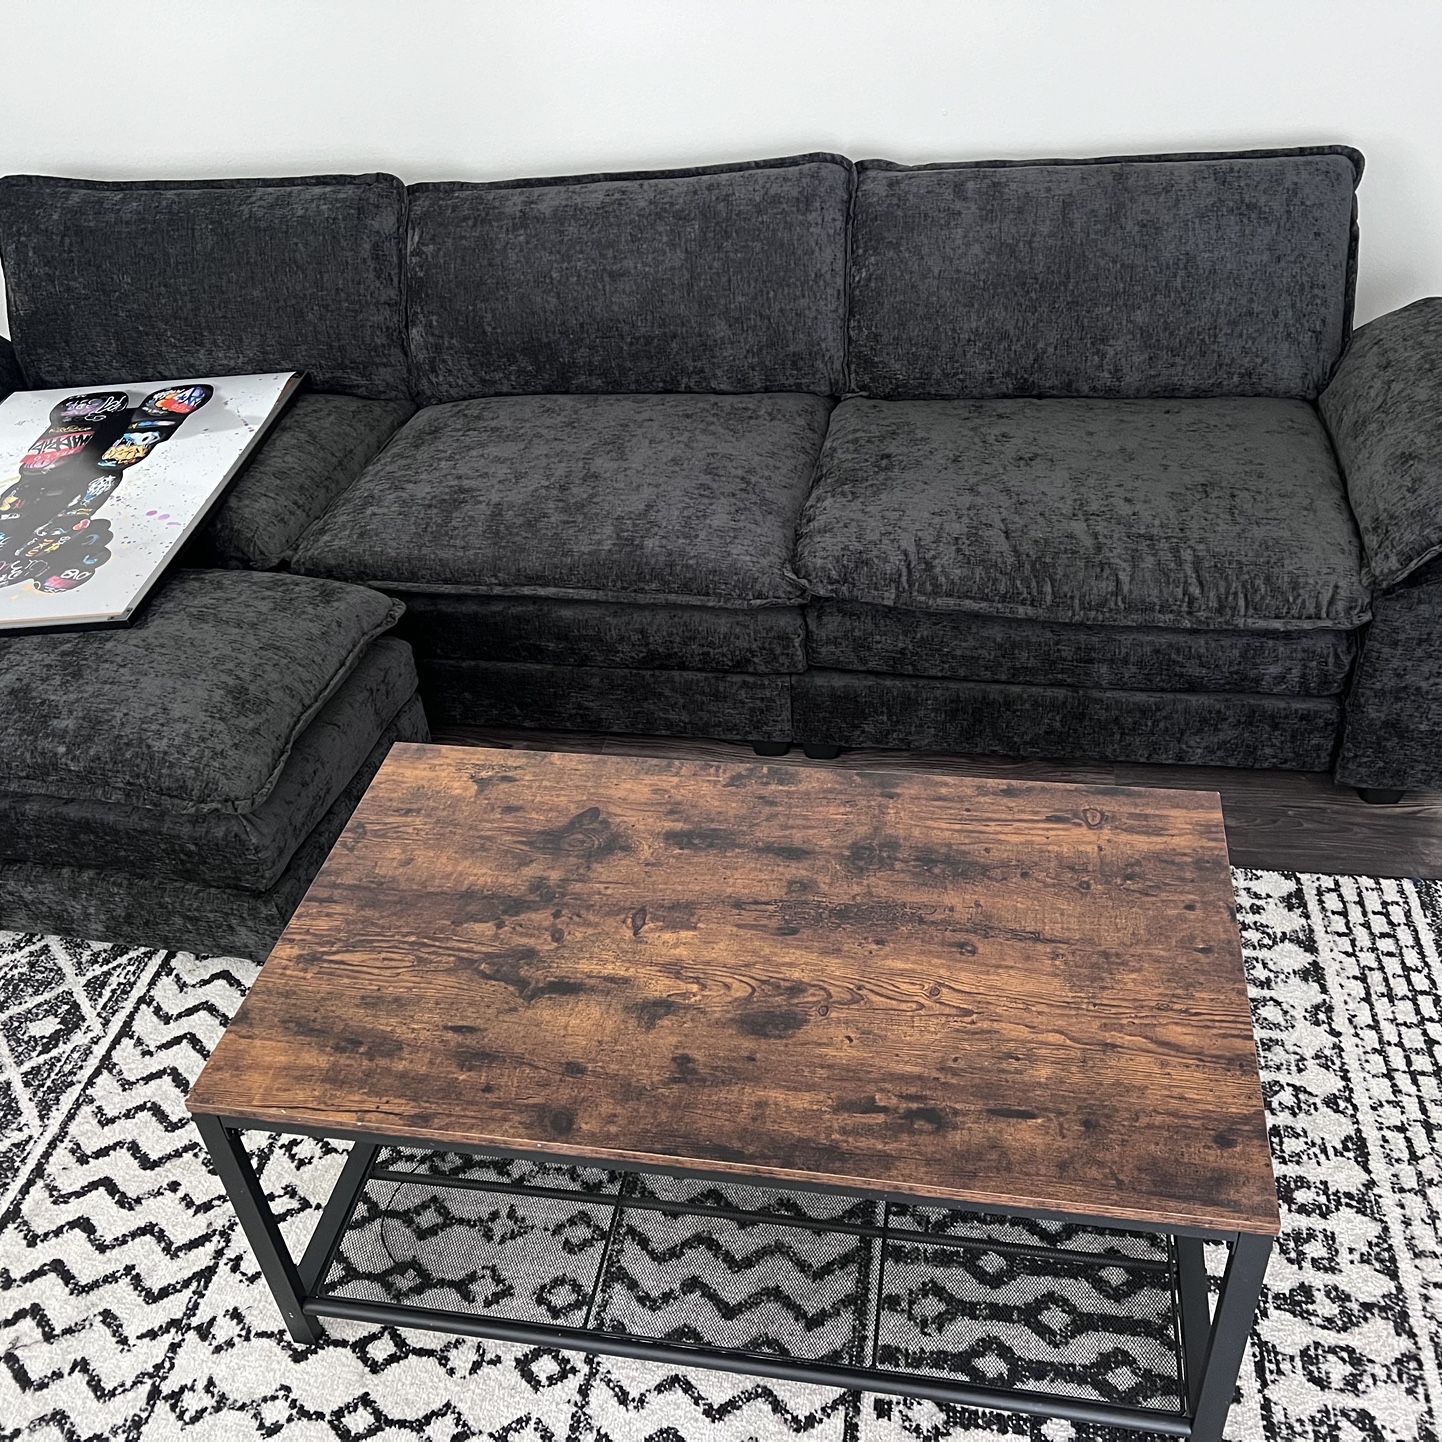 New Sofa With Ottoman Amazon Buy 121’/used Like New Coffe Table 